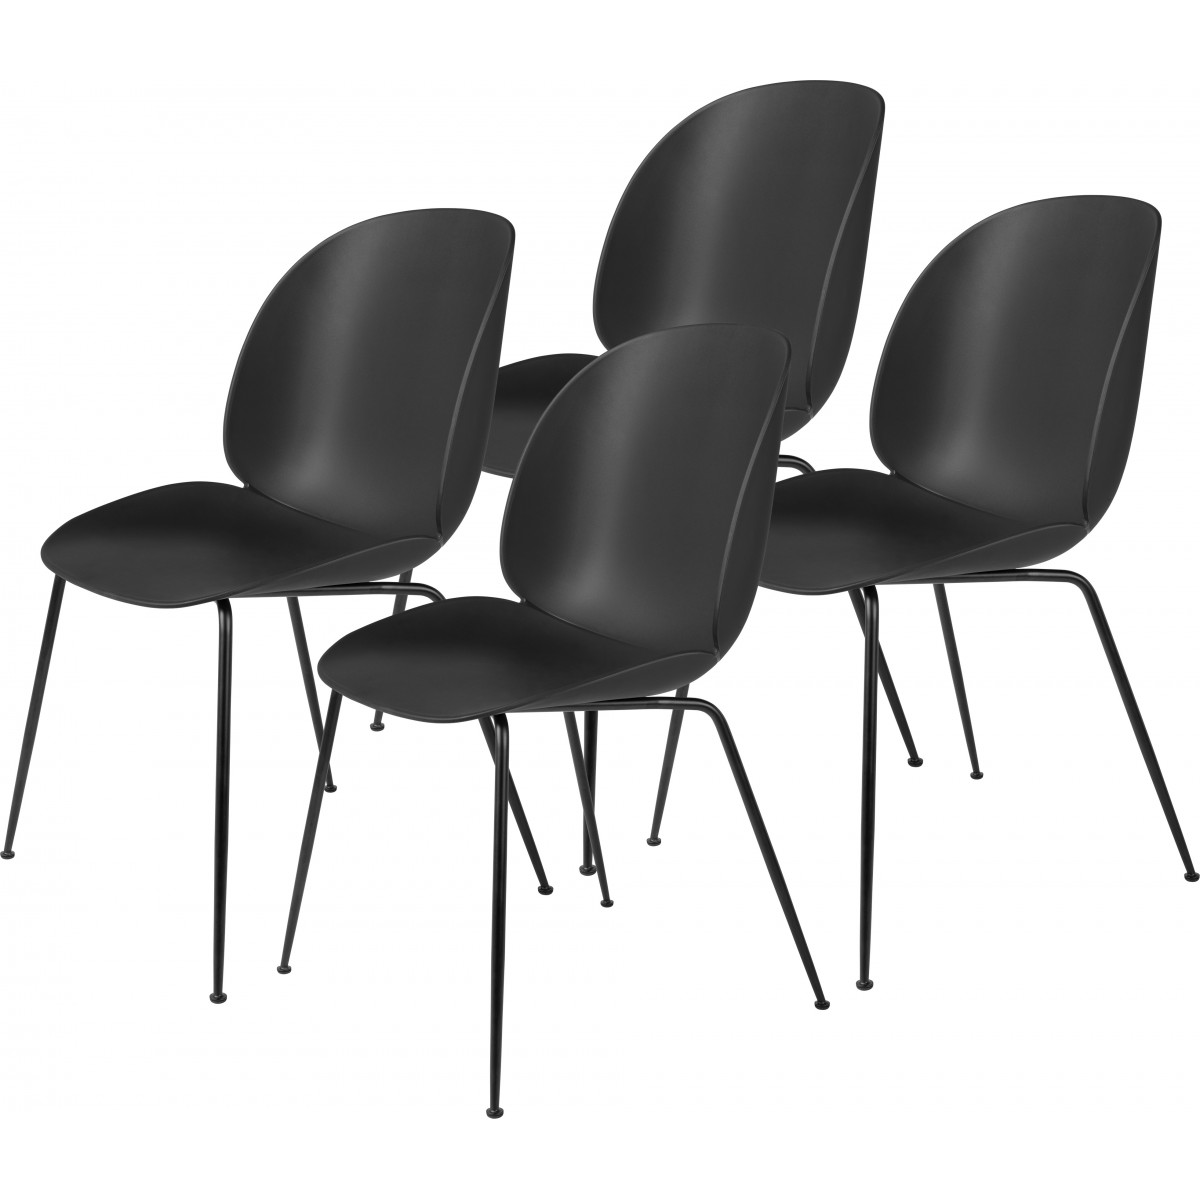 pack of 4 Beetle plastic chairs - black shell - metal legs